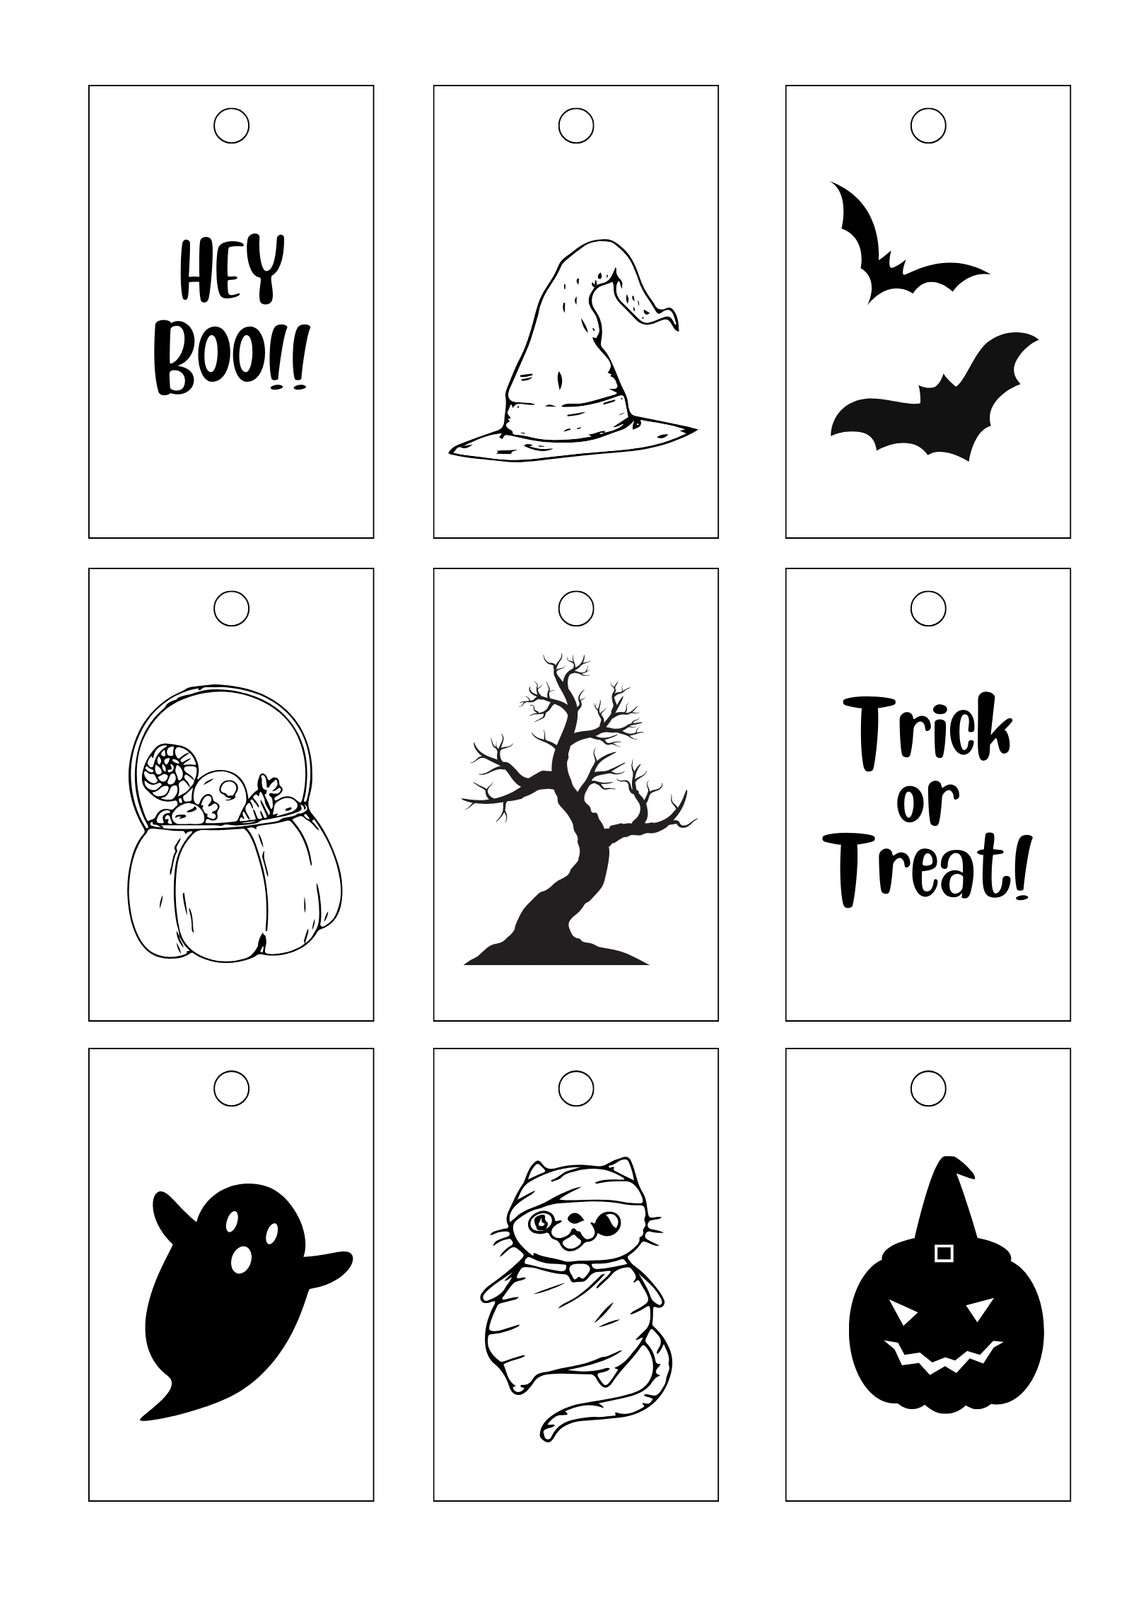 Free Printable Halloween Tags Black And White